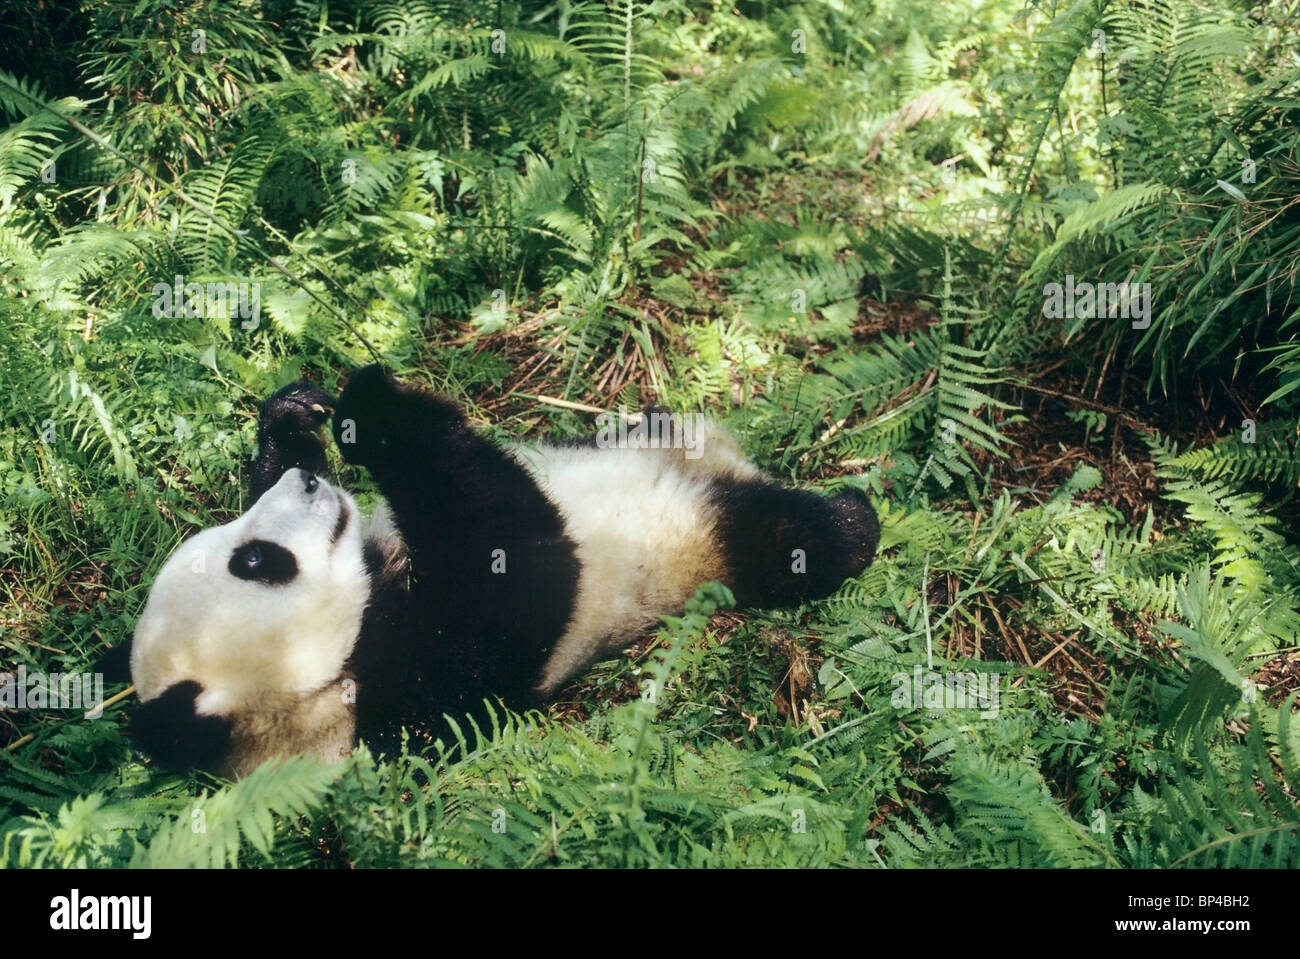 Young giant panda lying down among ferns playing with bamboo, Wolong China Stock Photo